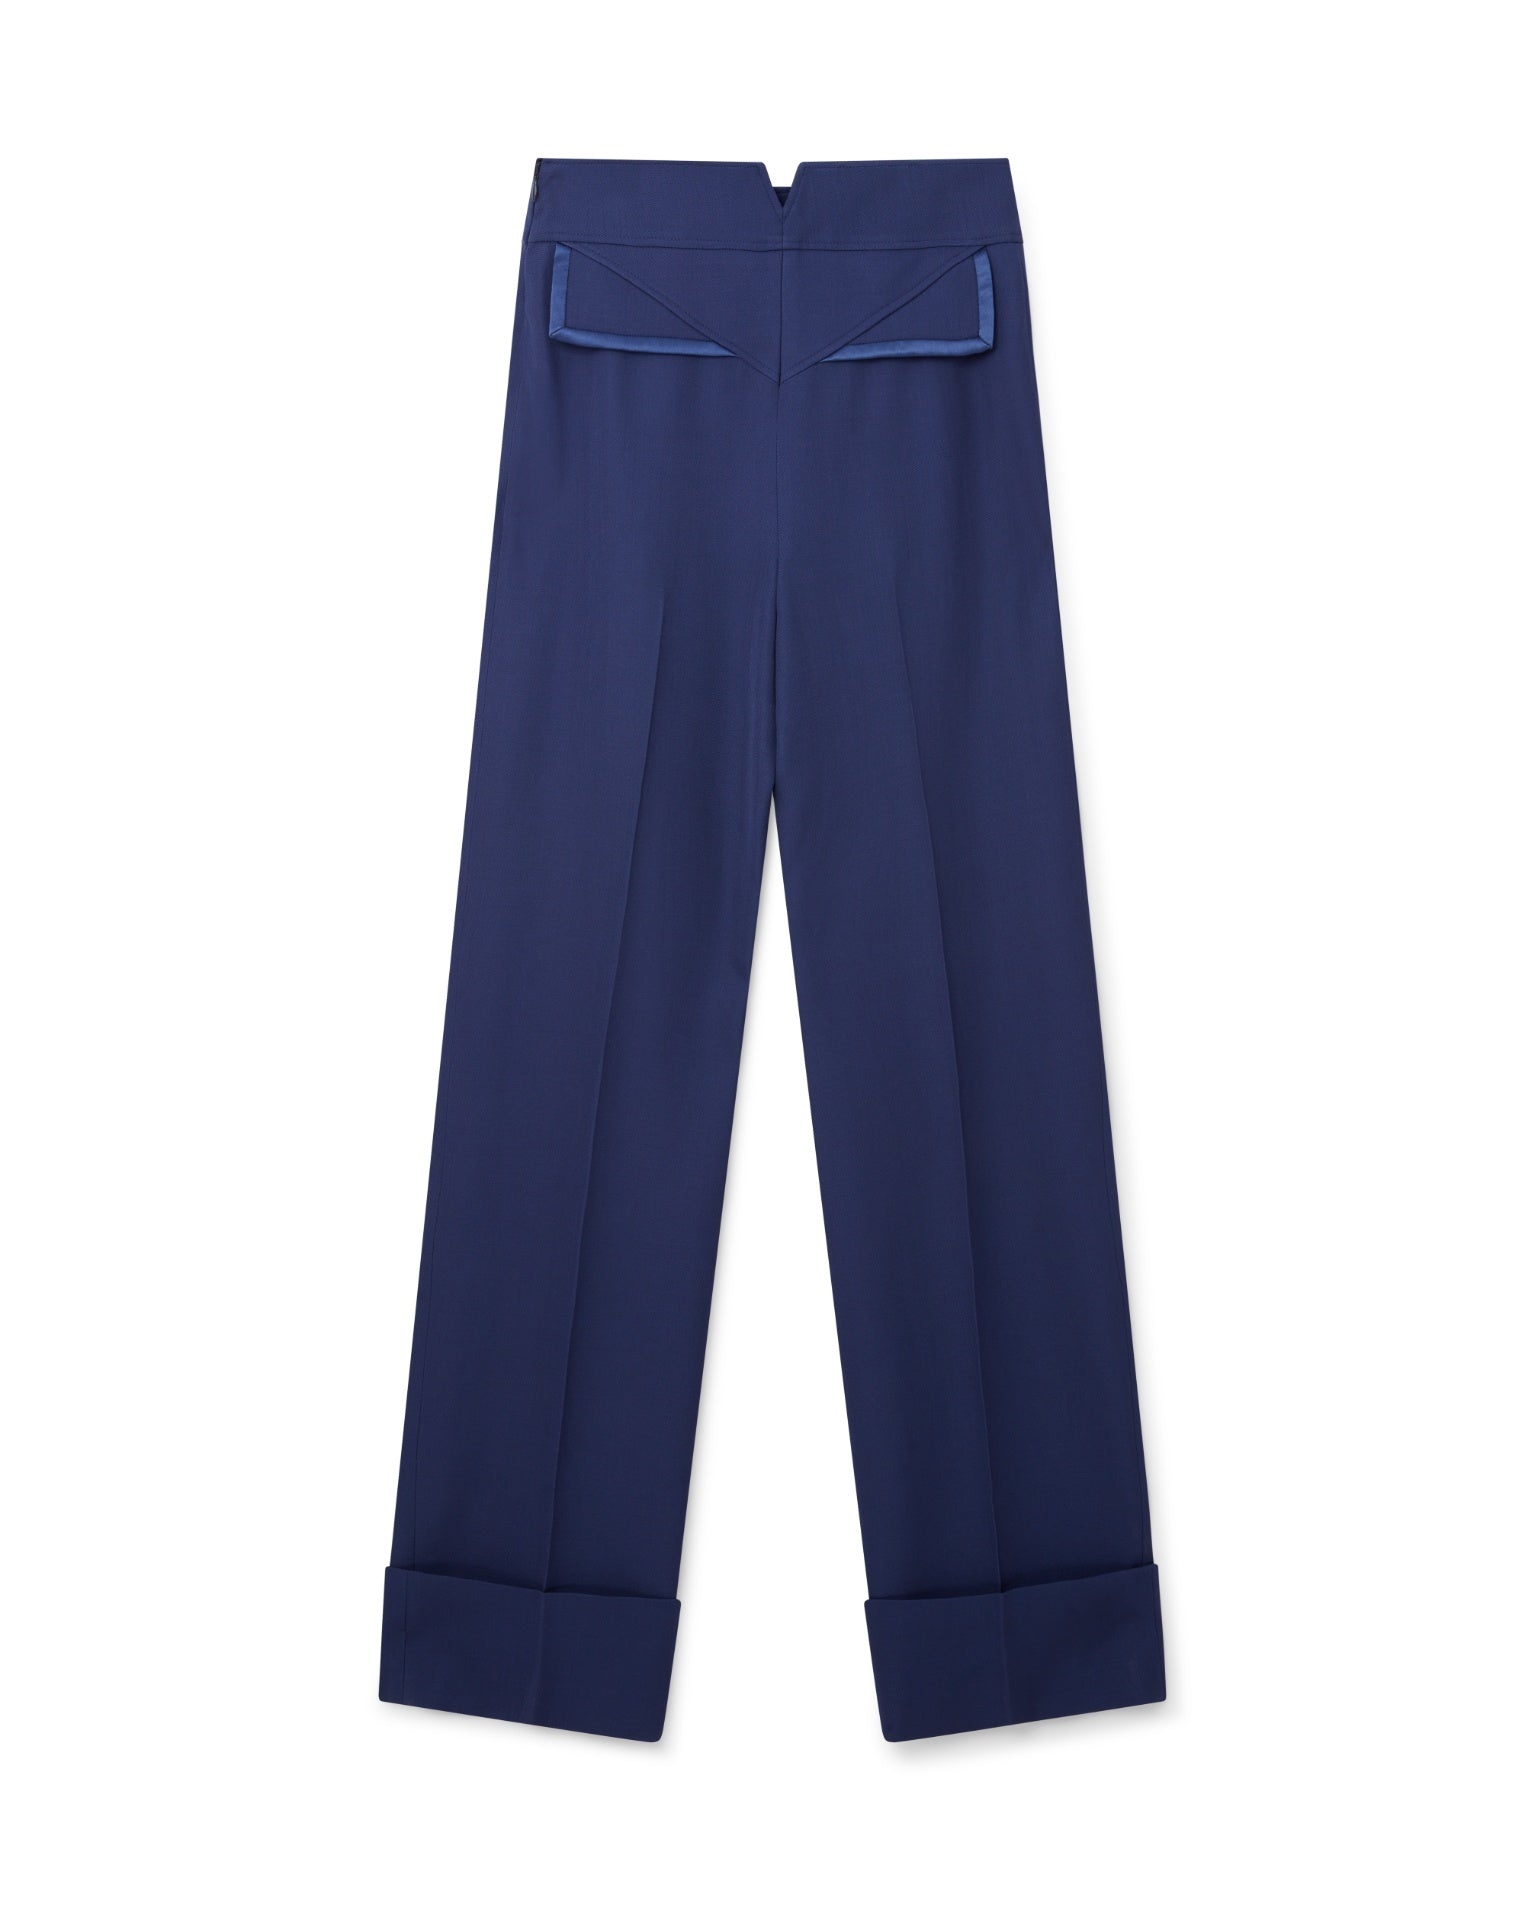 Navy Waist Panel Trousers - 2